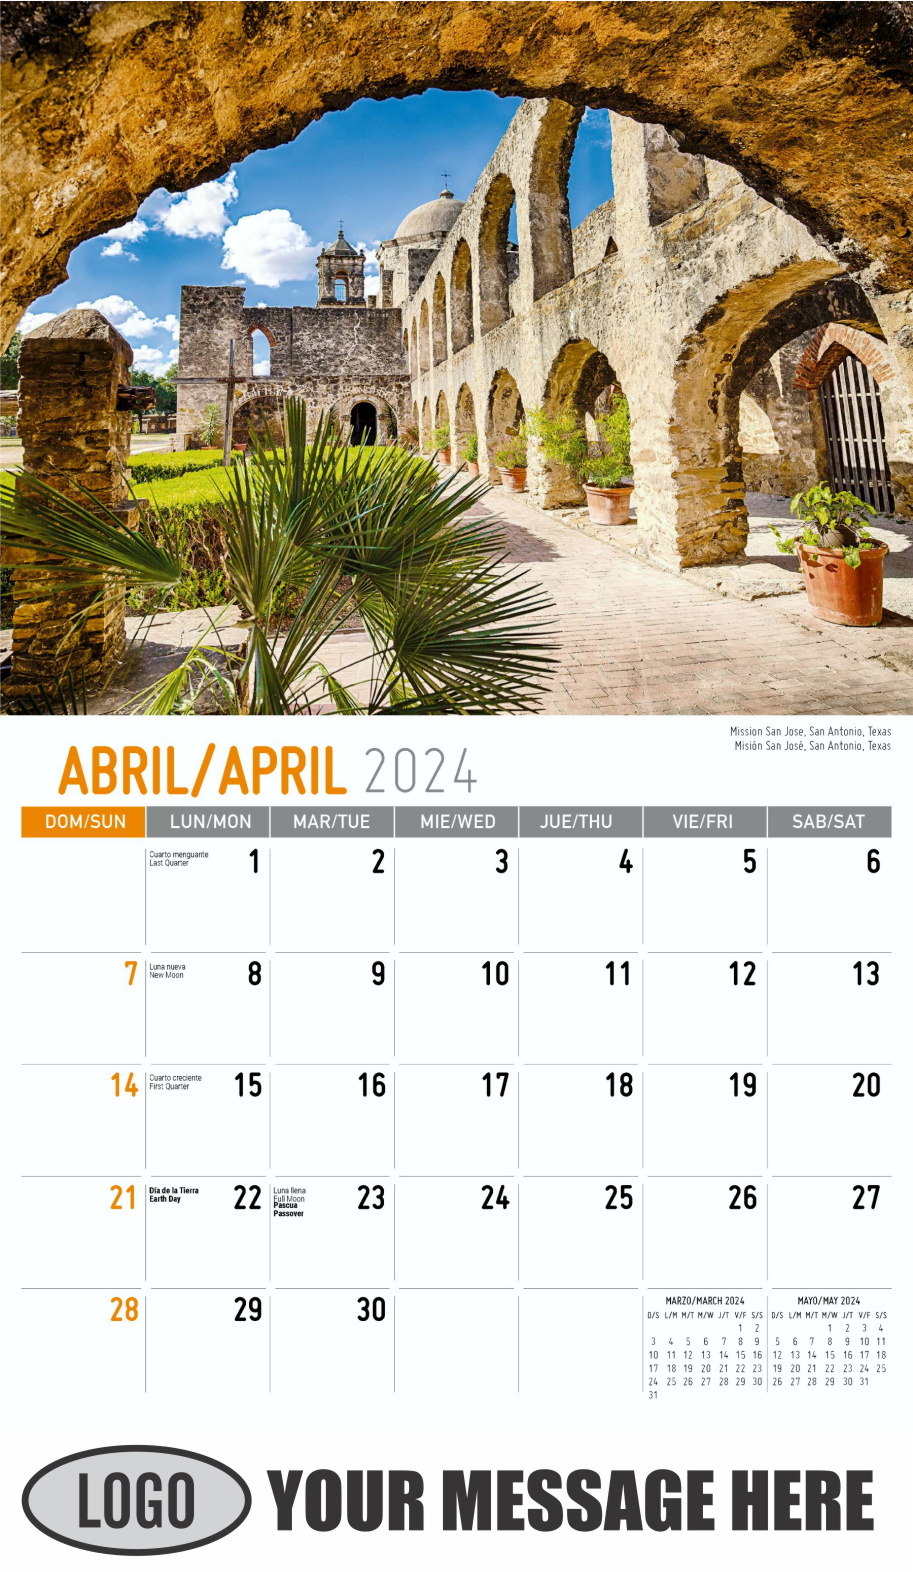 Scenes of America 2024 Bilingual Business Promo Calendar - April